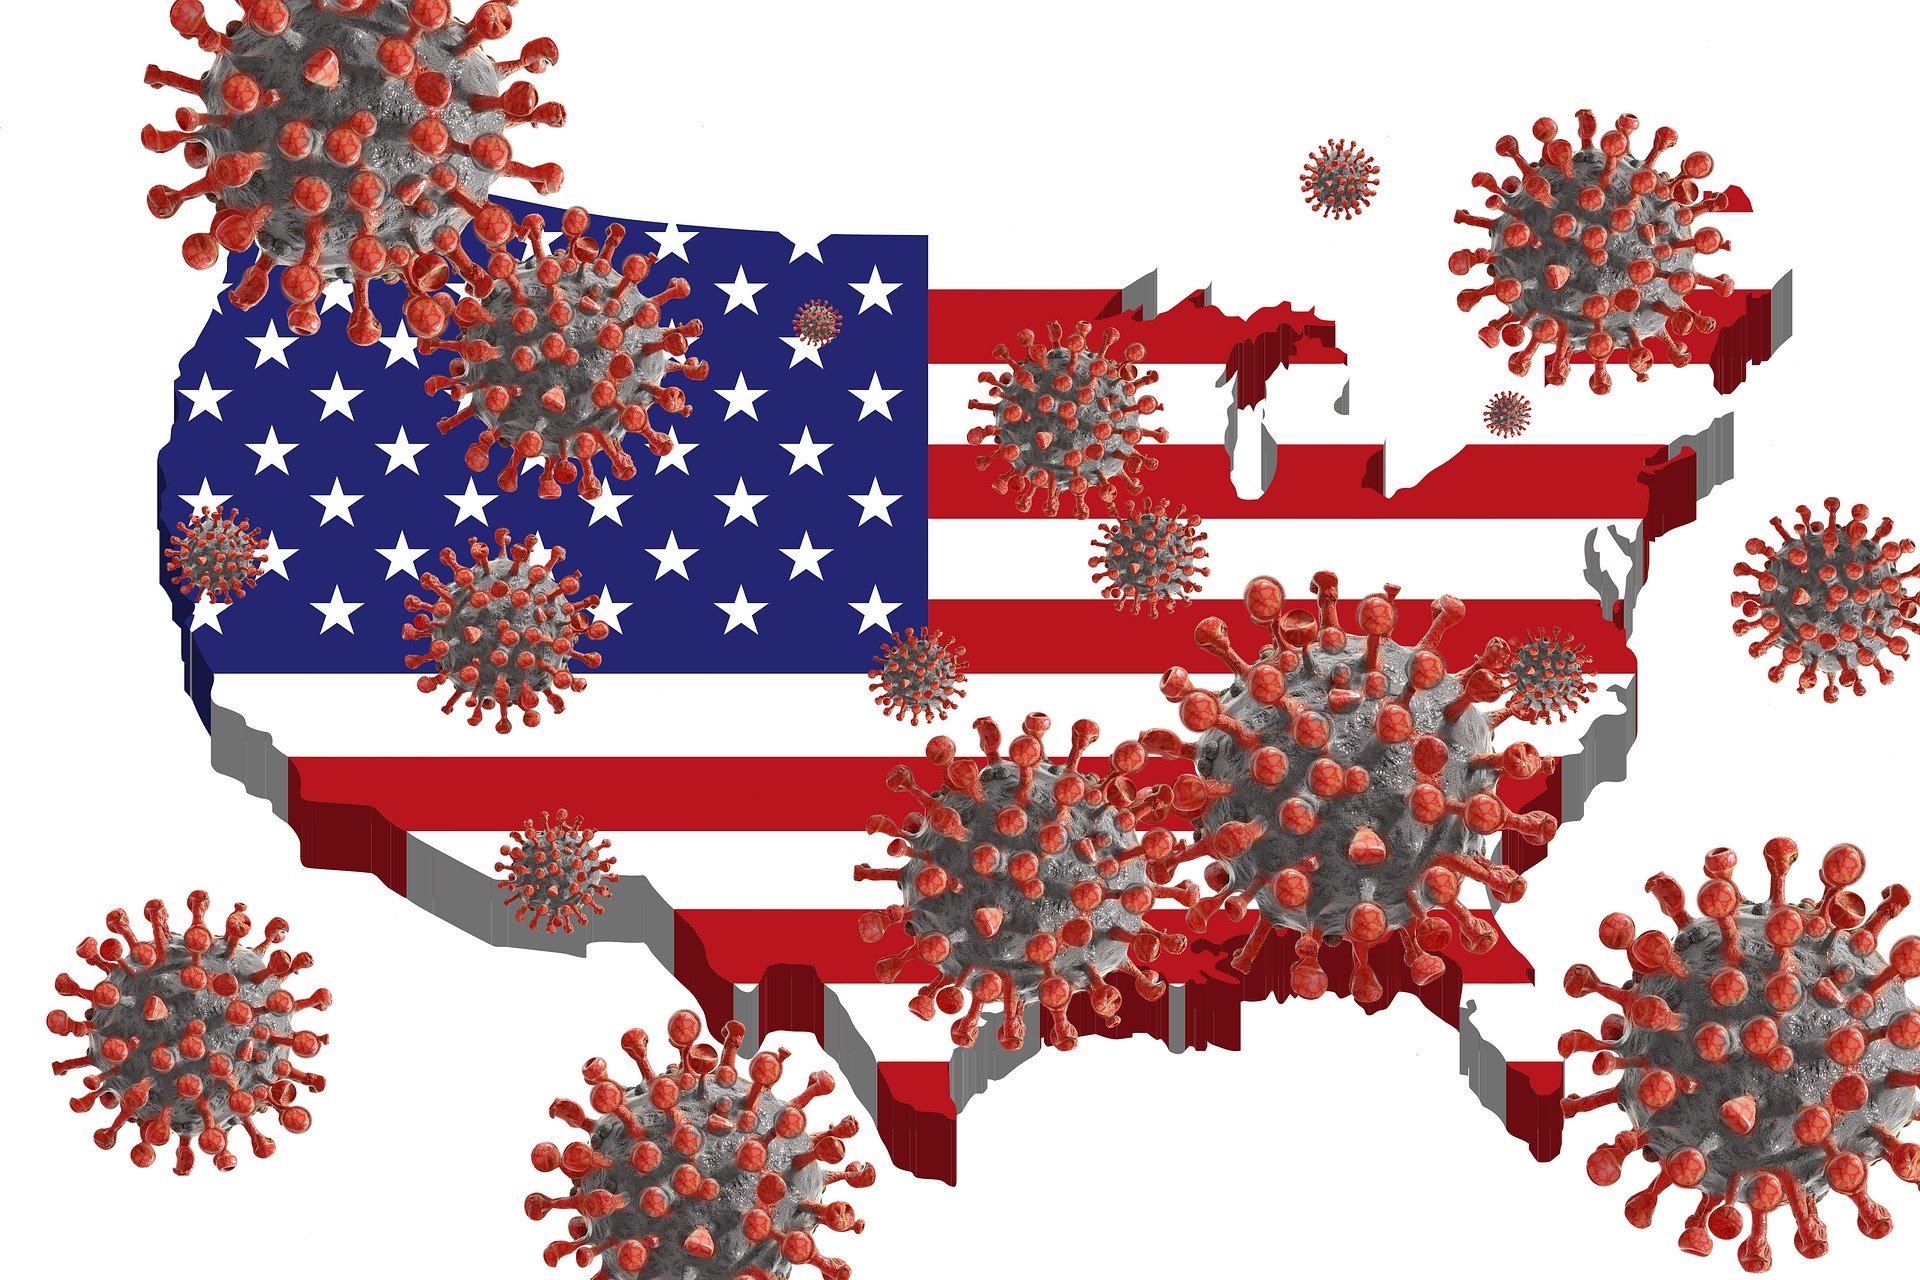 Stylized coronavirus balls raining down on a red, white and blue United States.